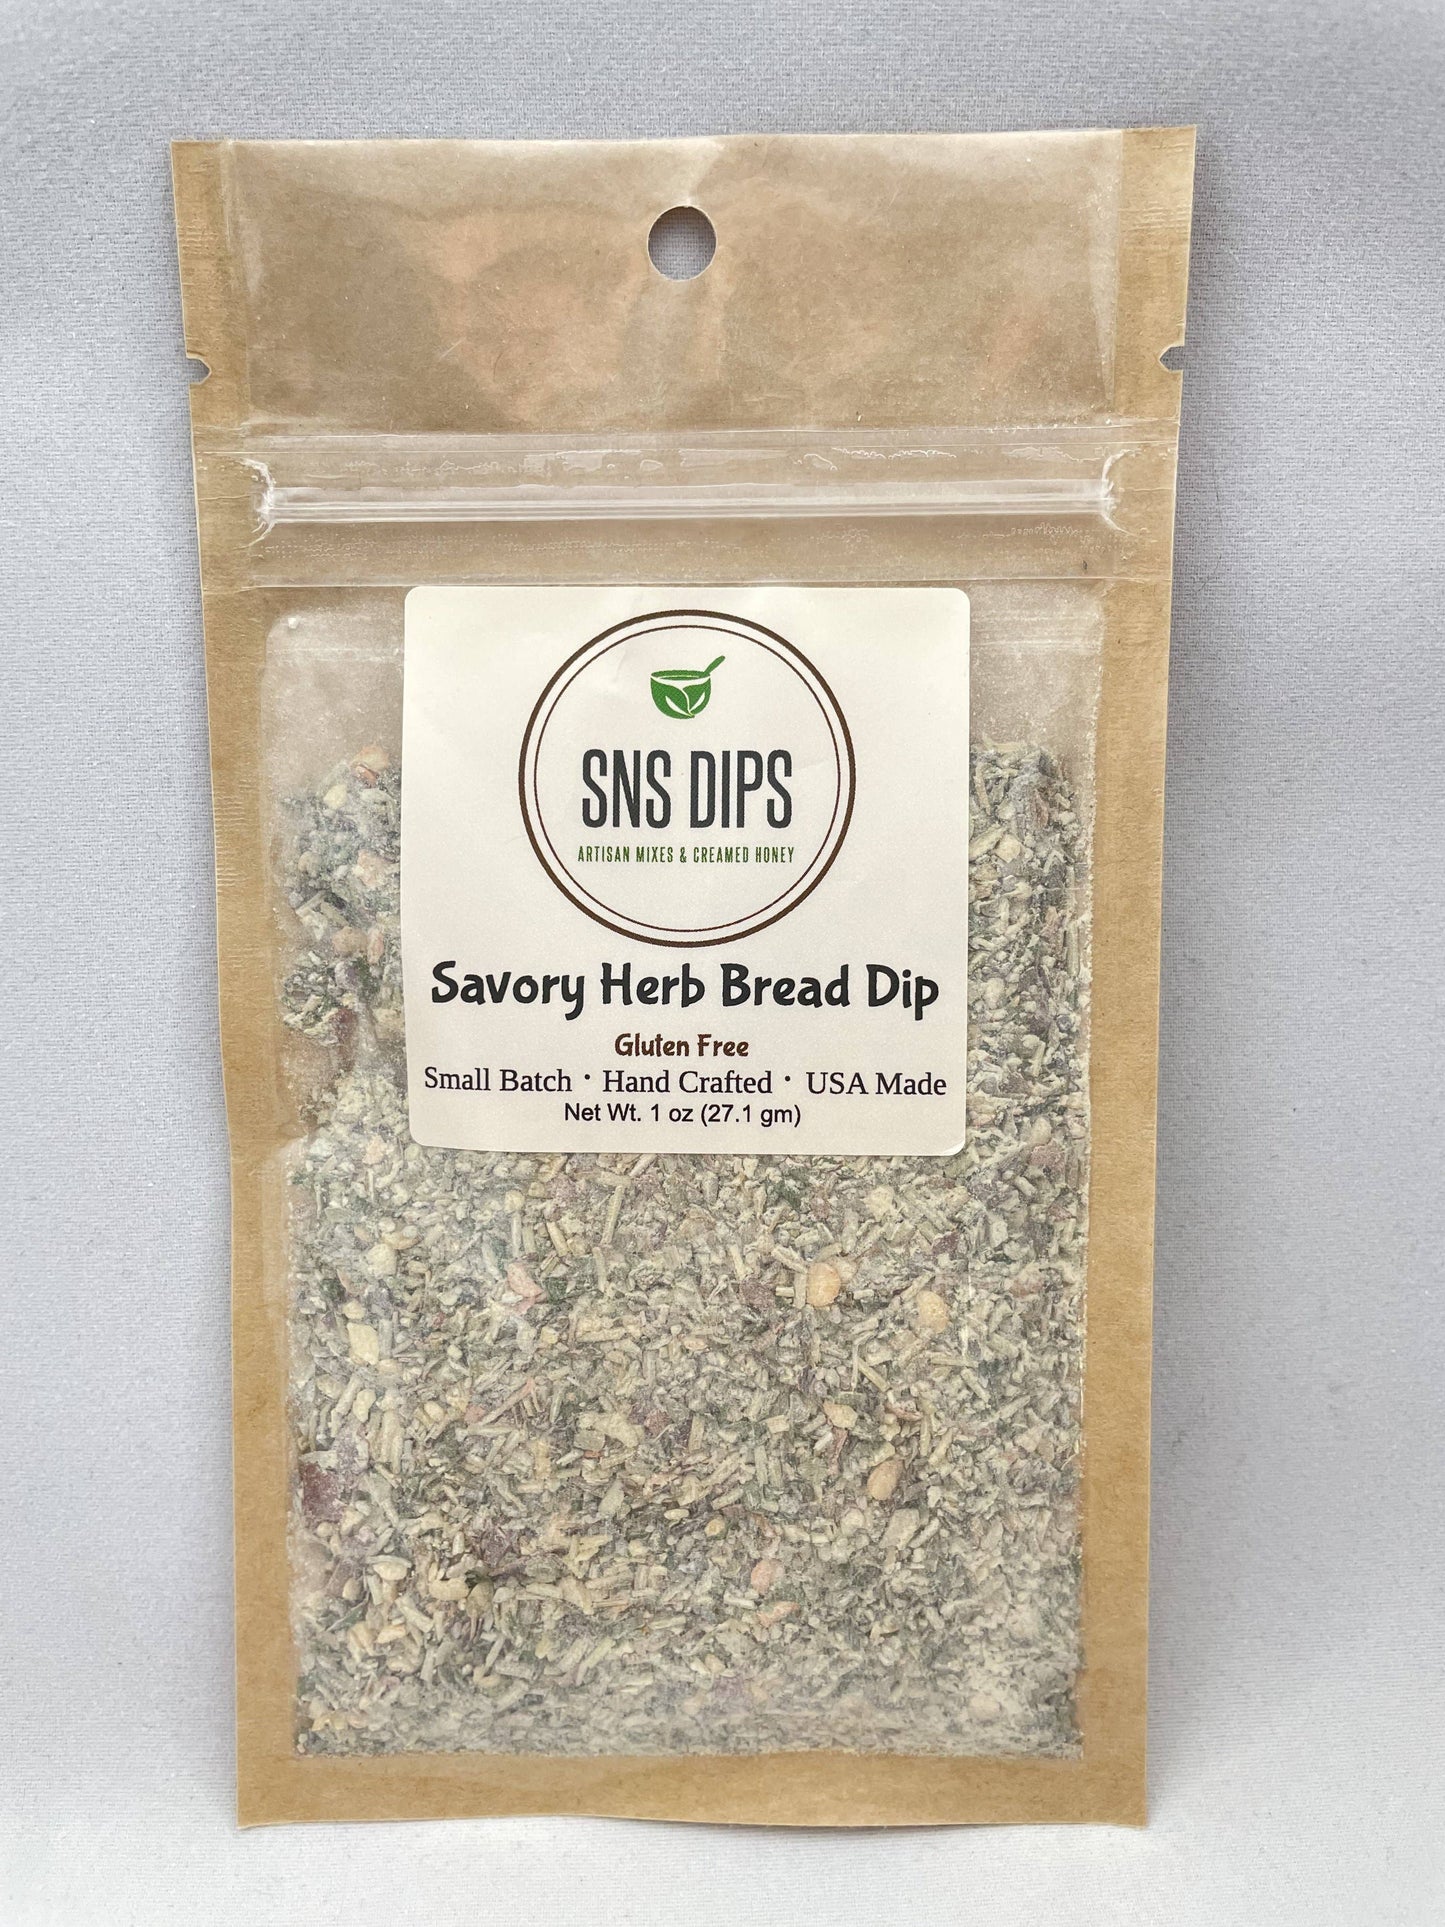 Savory Herb Bread Dip Mix